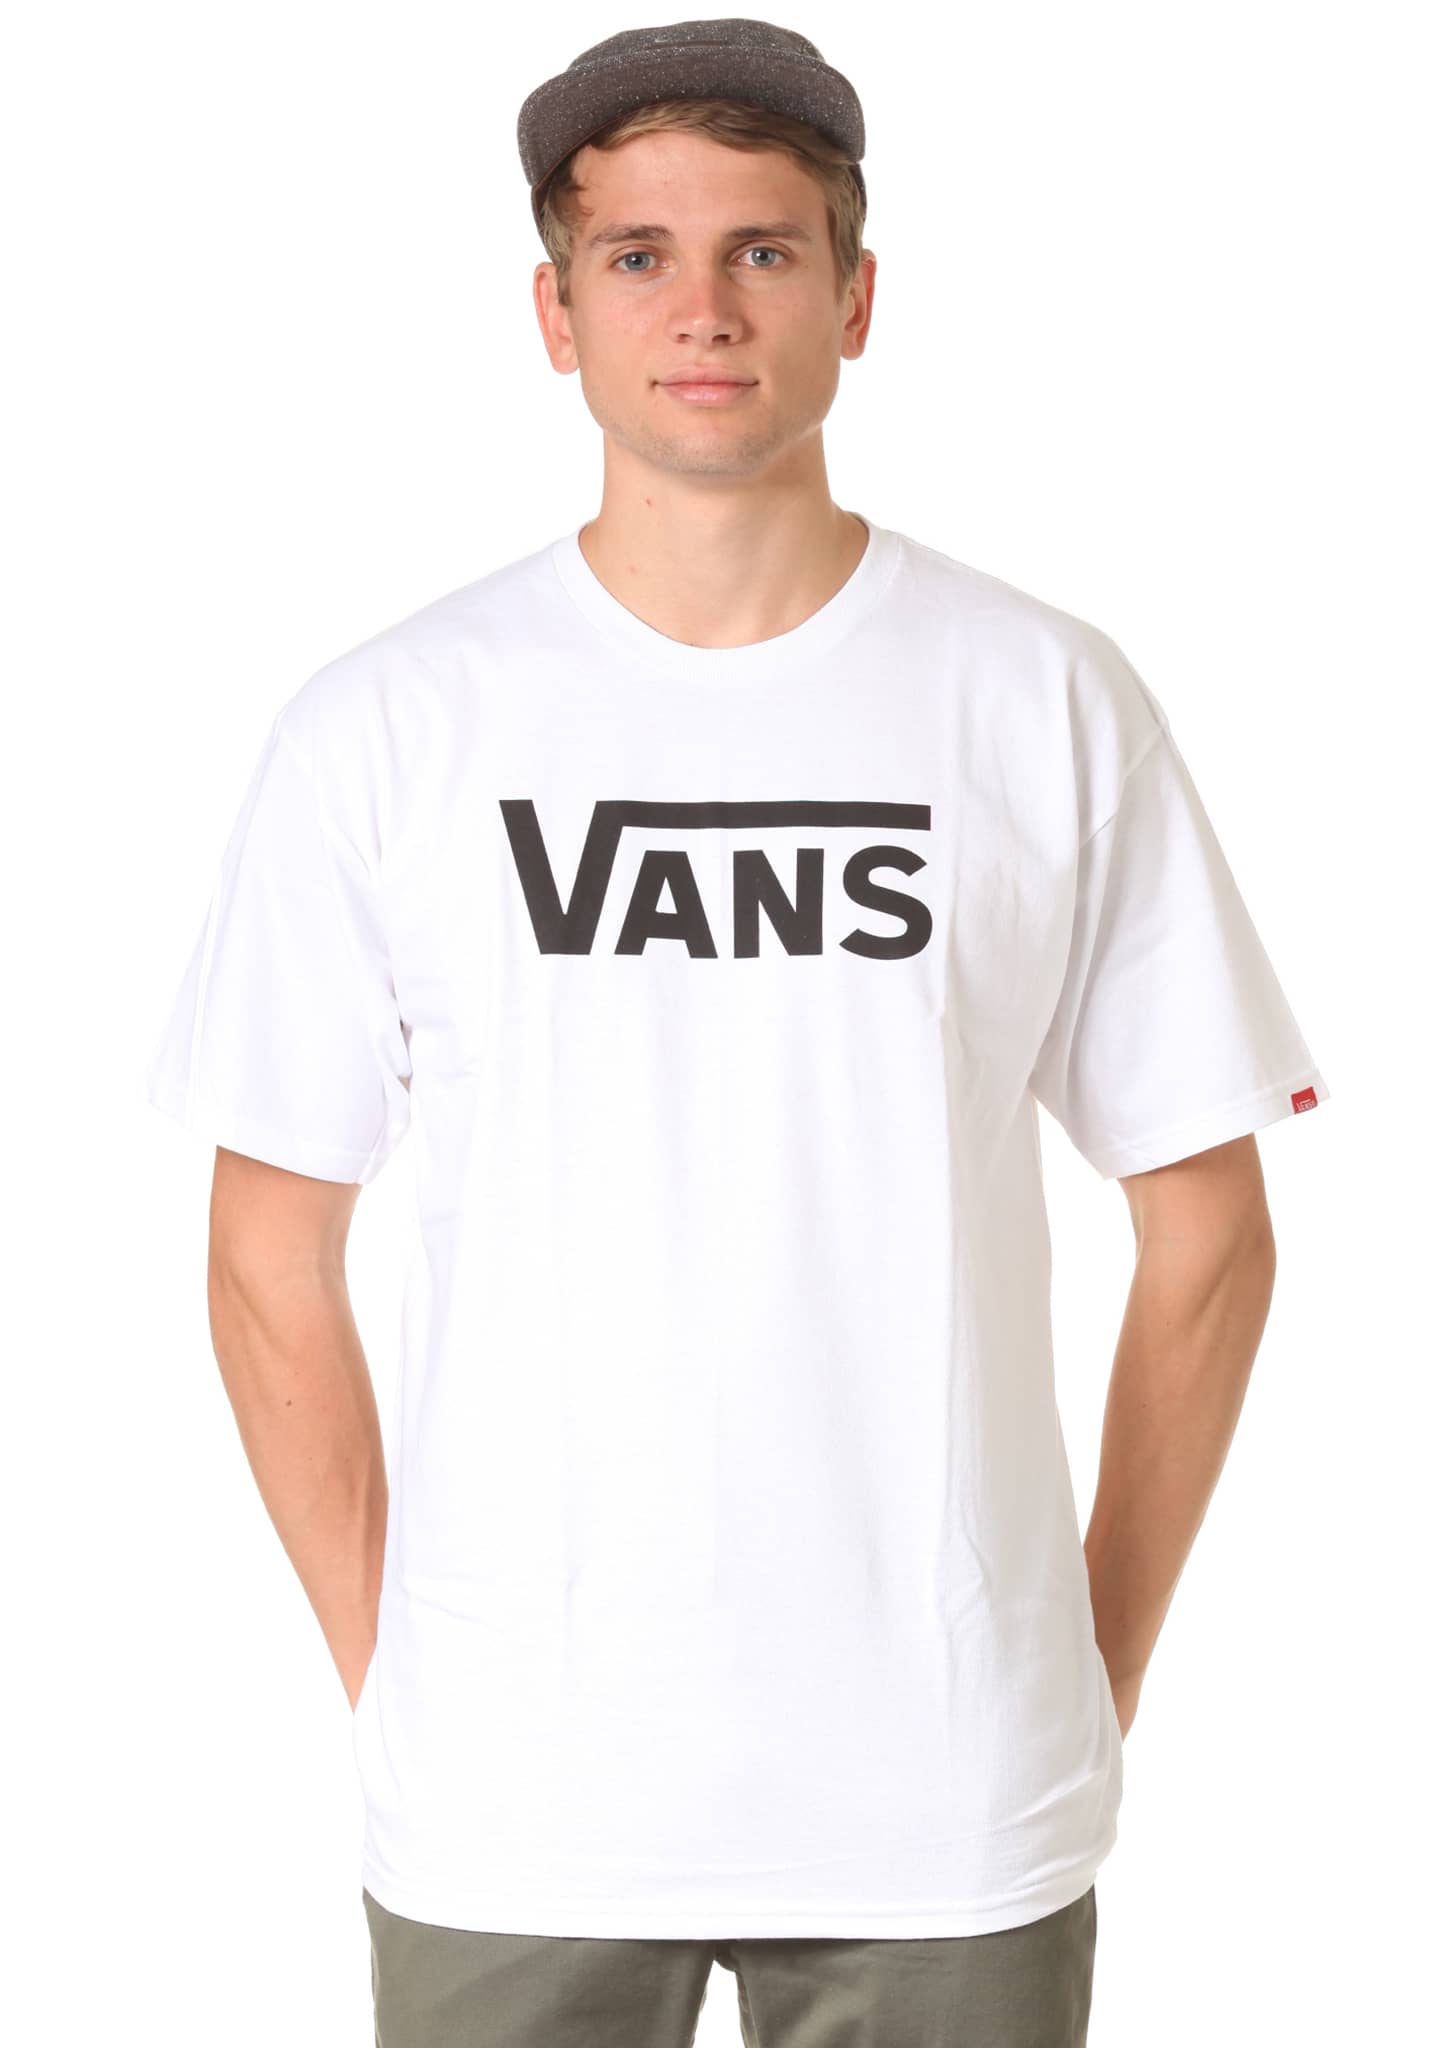 Vans Vans Classic T-Shirt weiß/schwarz L